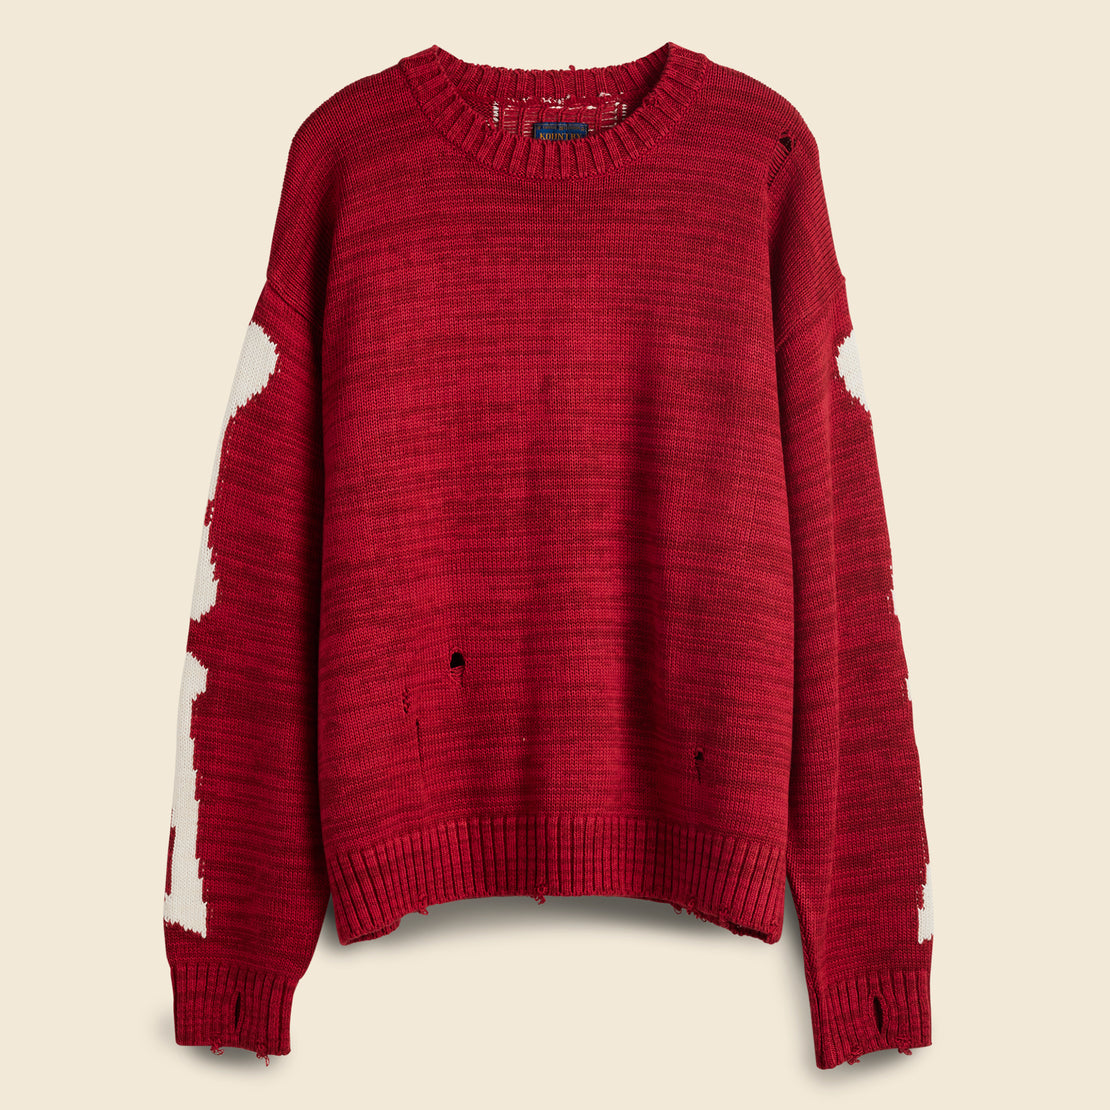 Kapital Kountry Cotton Knit Bone Crew Sweater - Red